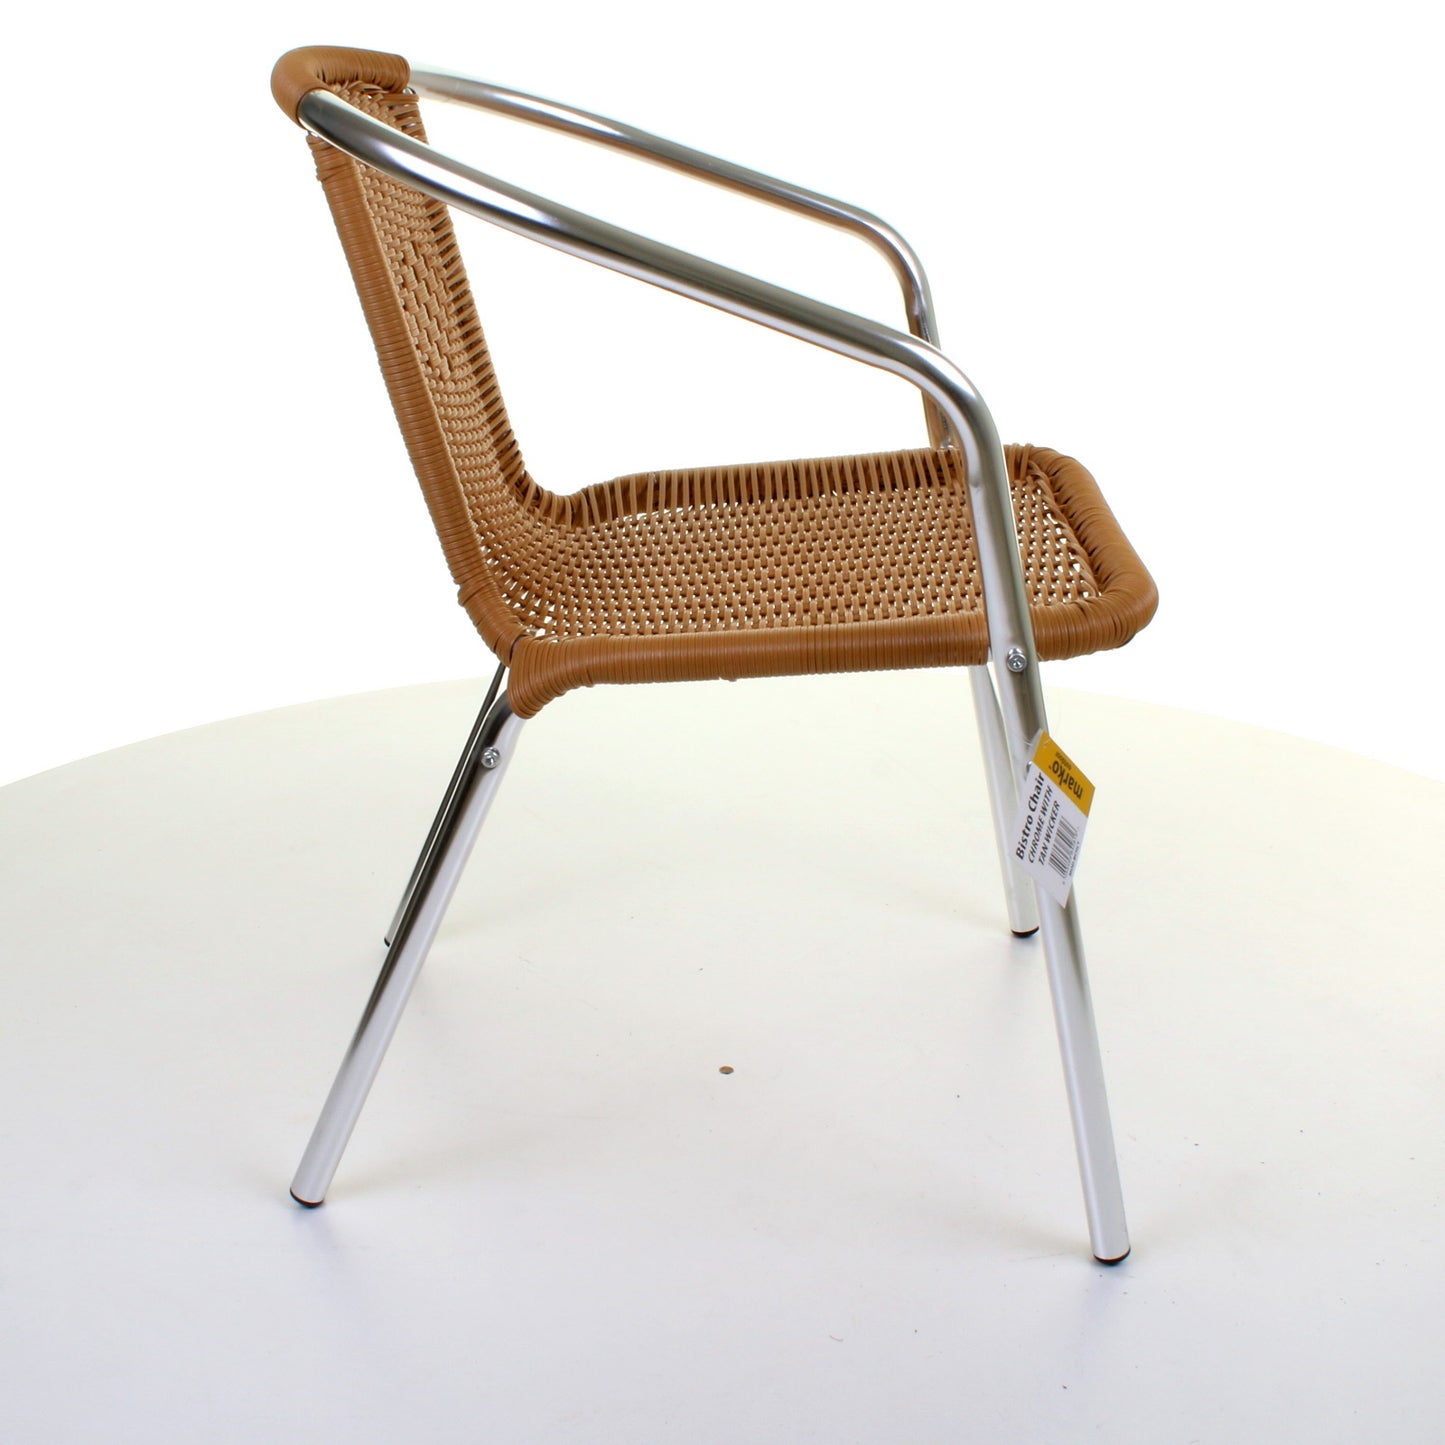 Tan Wicker Chrome Bistro Chair